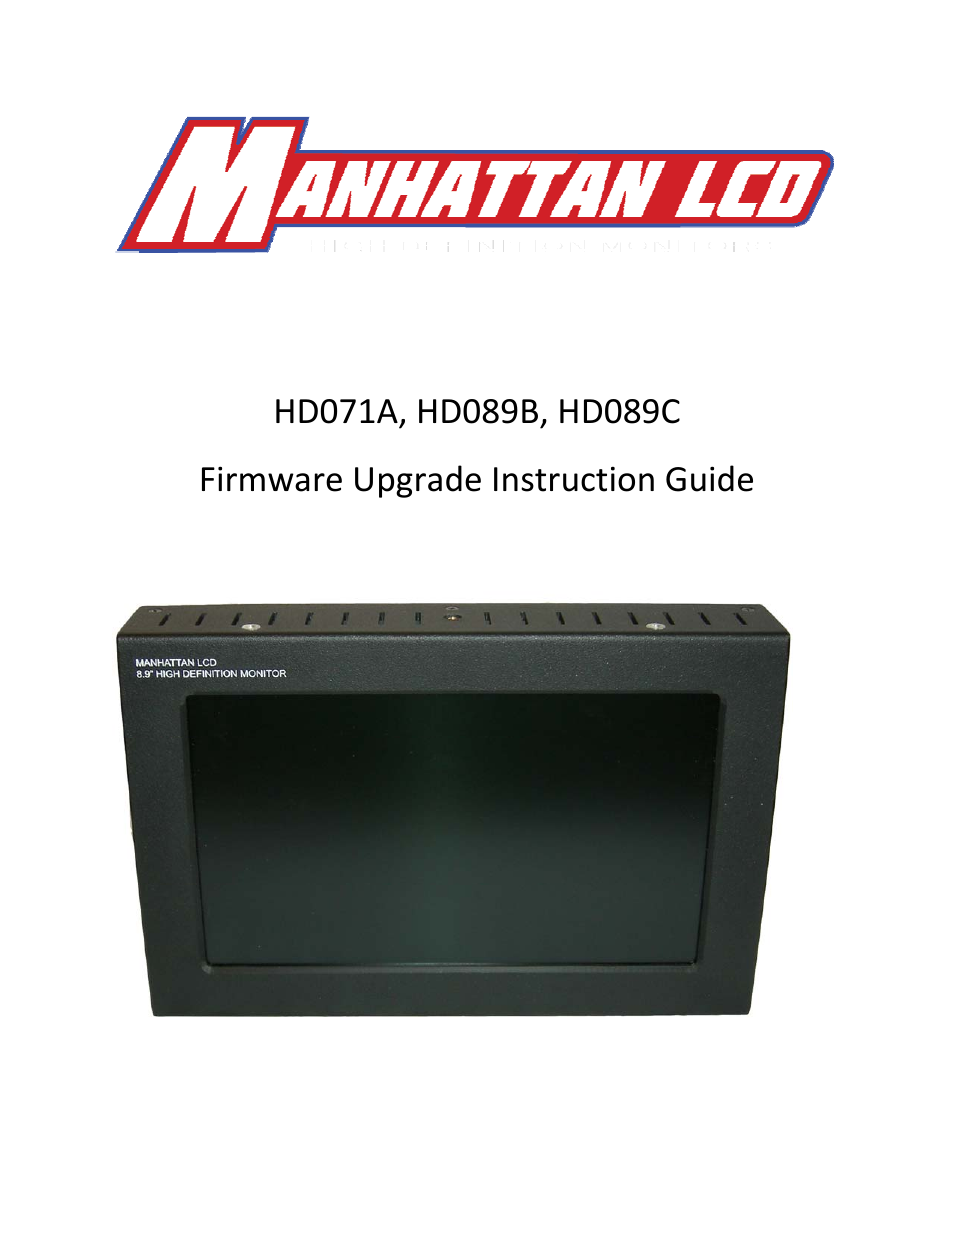 HD089B Firmware Upgrade Instructions